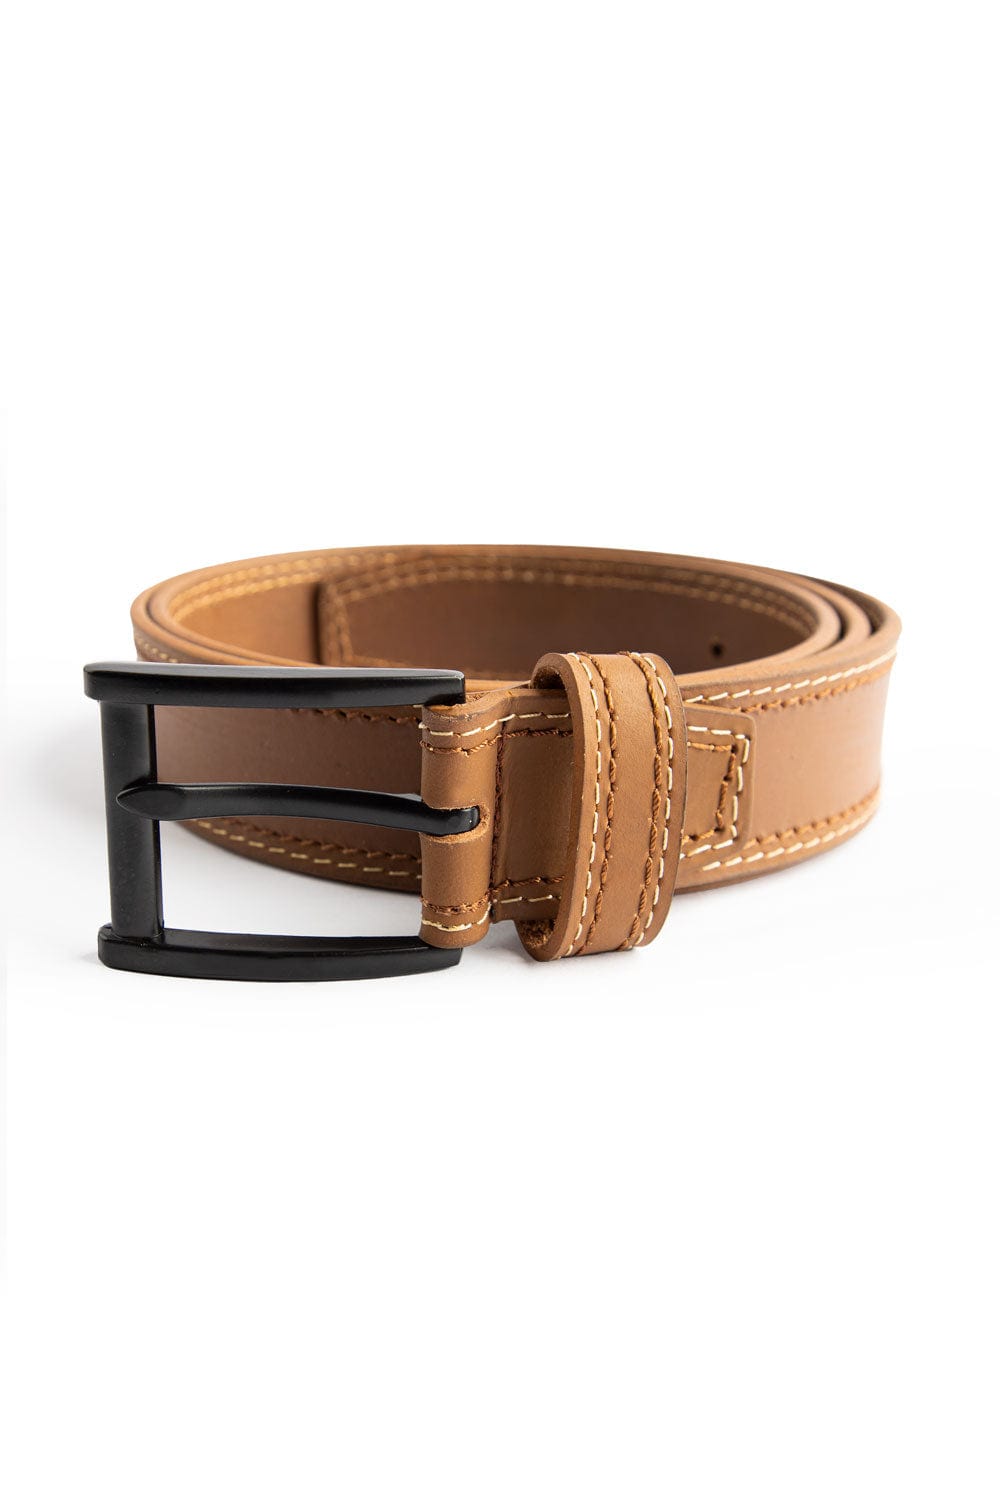 Hope Not Out by Shahid Afridi Men Belts Premium Leather Denim Belt HMBLT210005